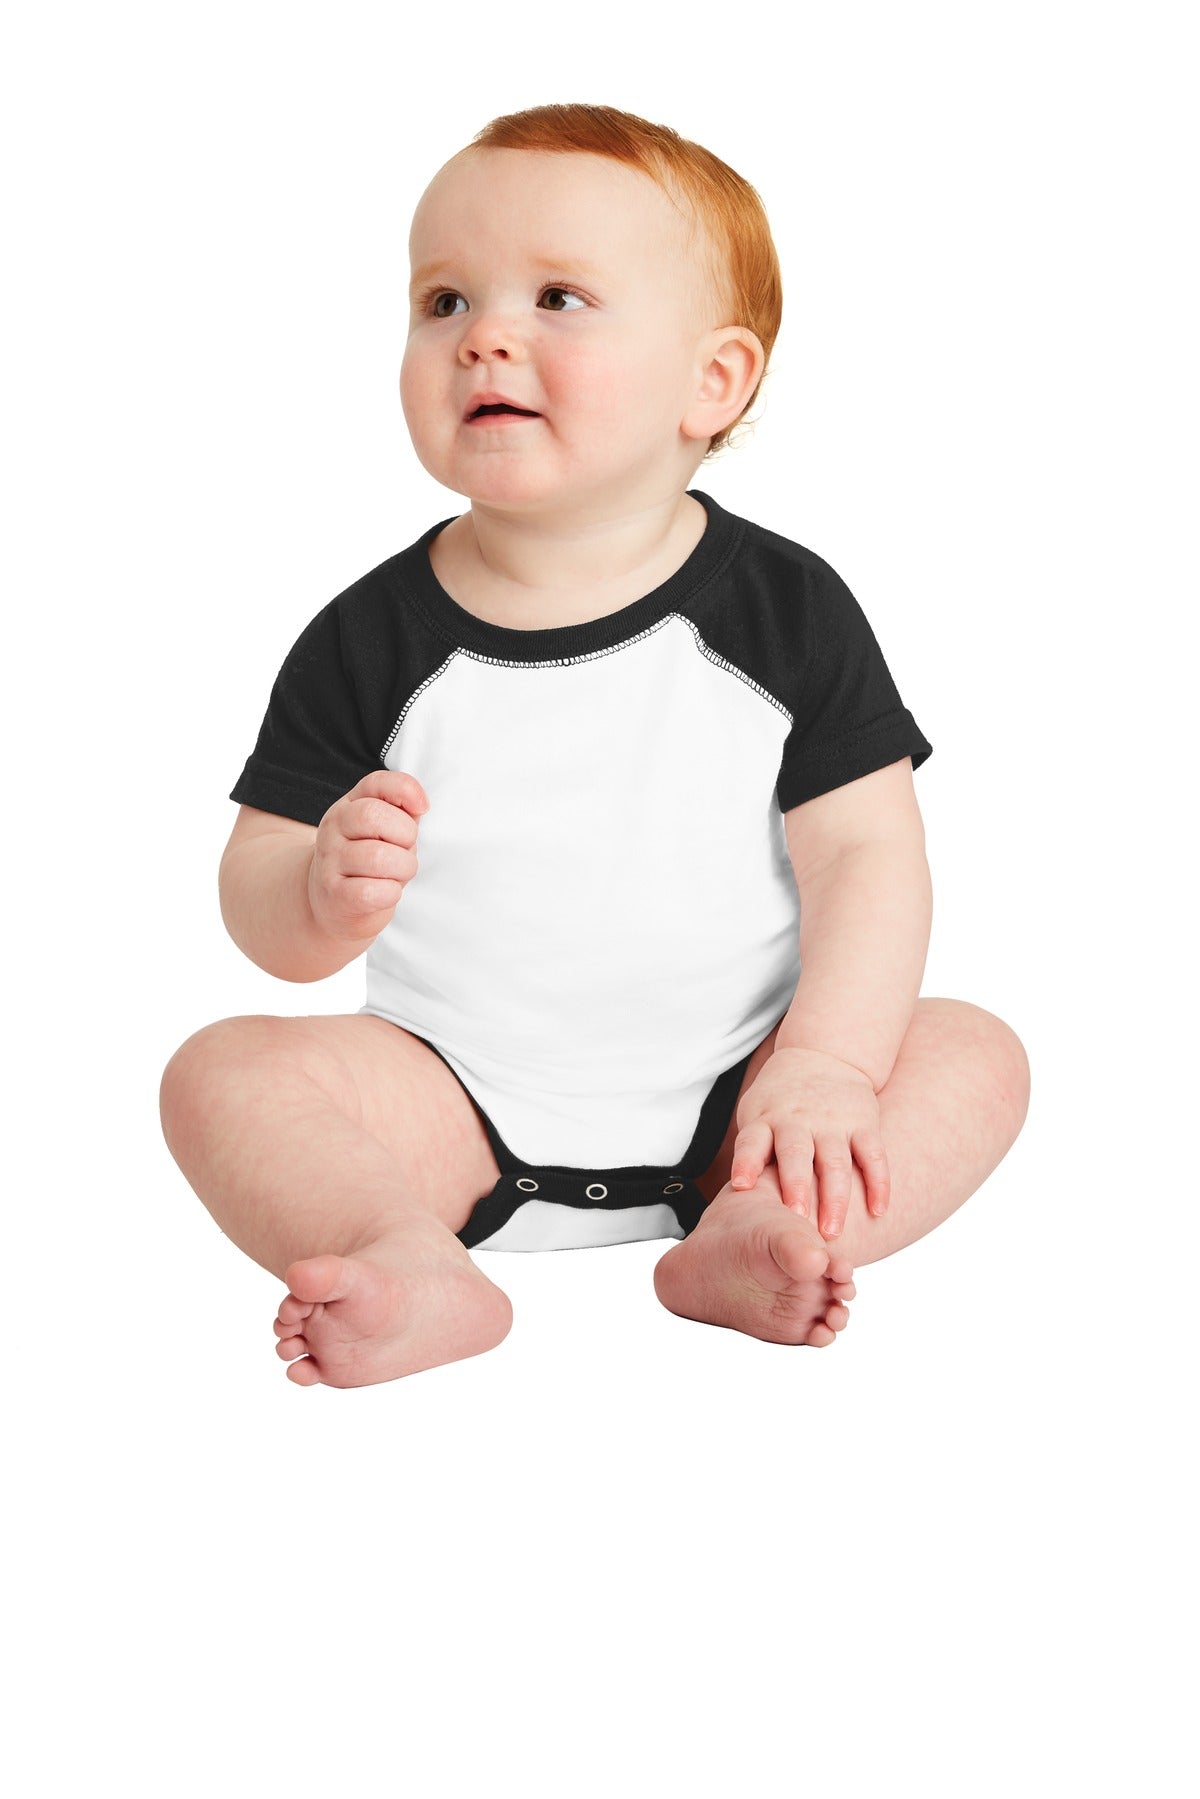 Rabbit Skins™ Infant Baseball Fine Jersey Bodysuit. RS4430